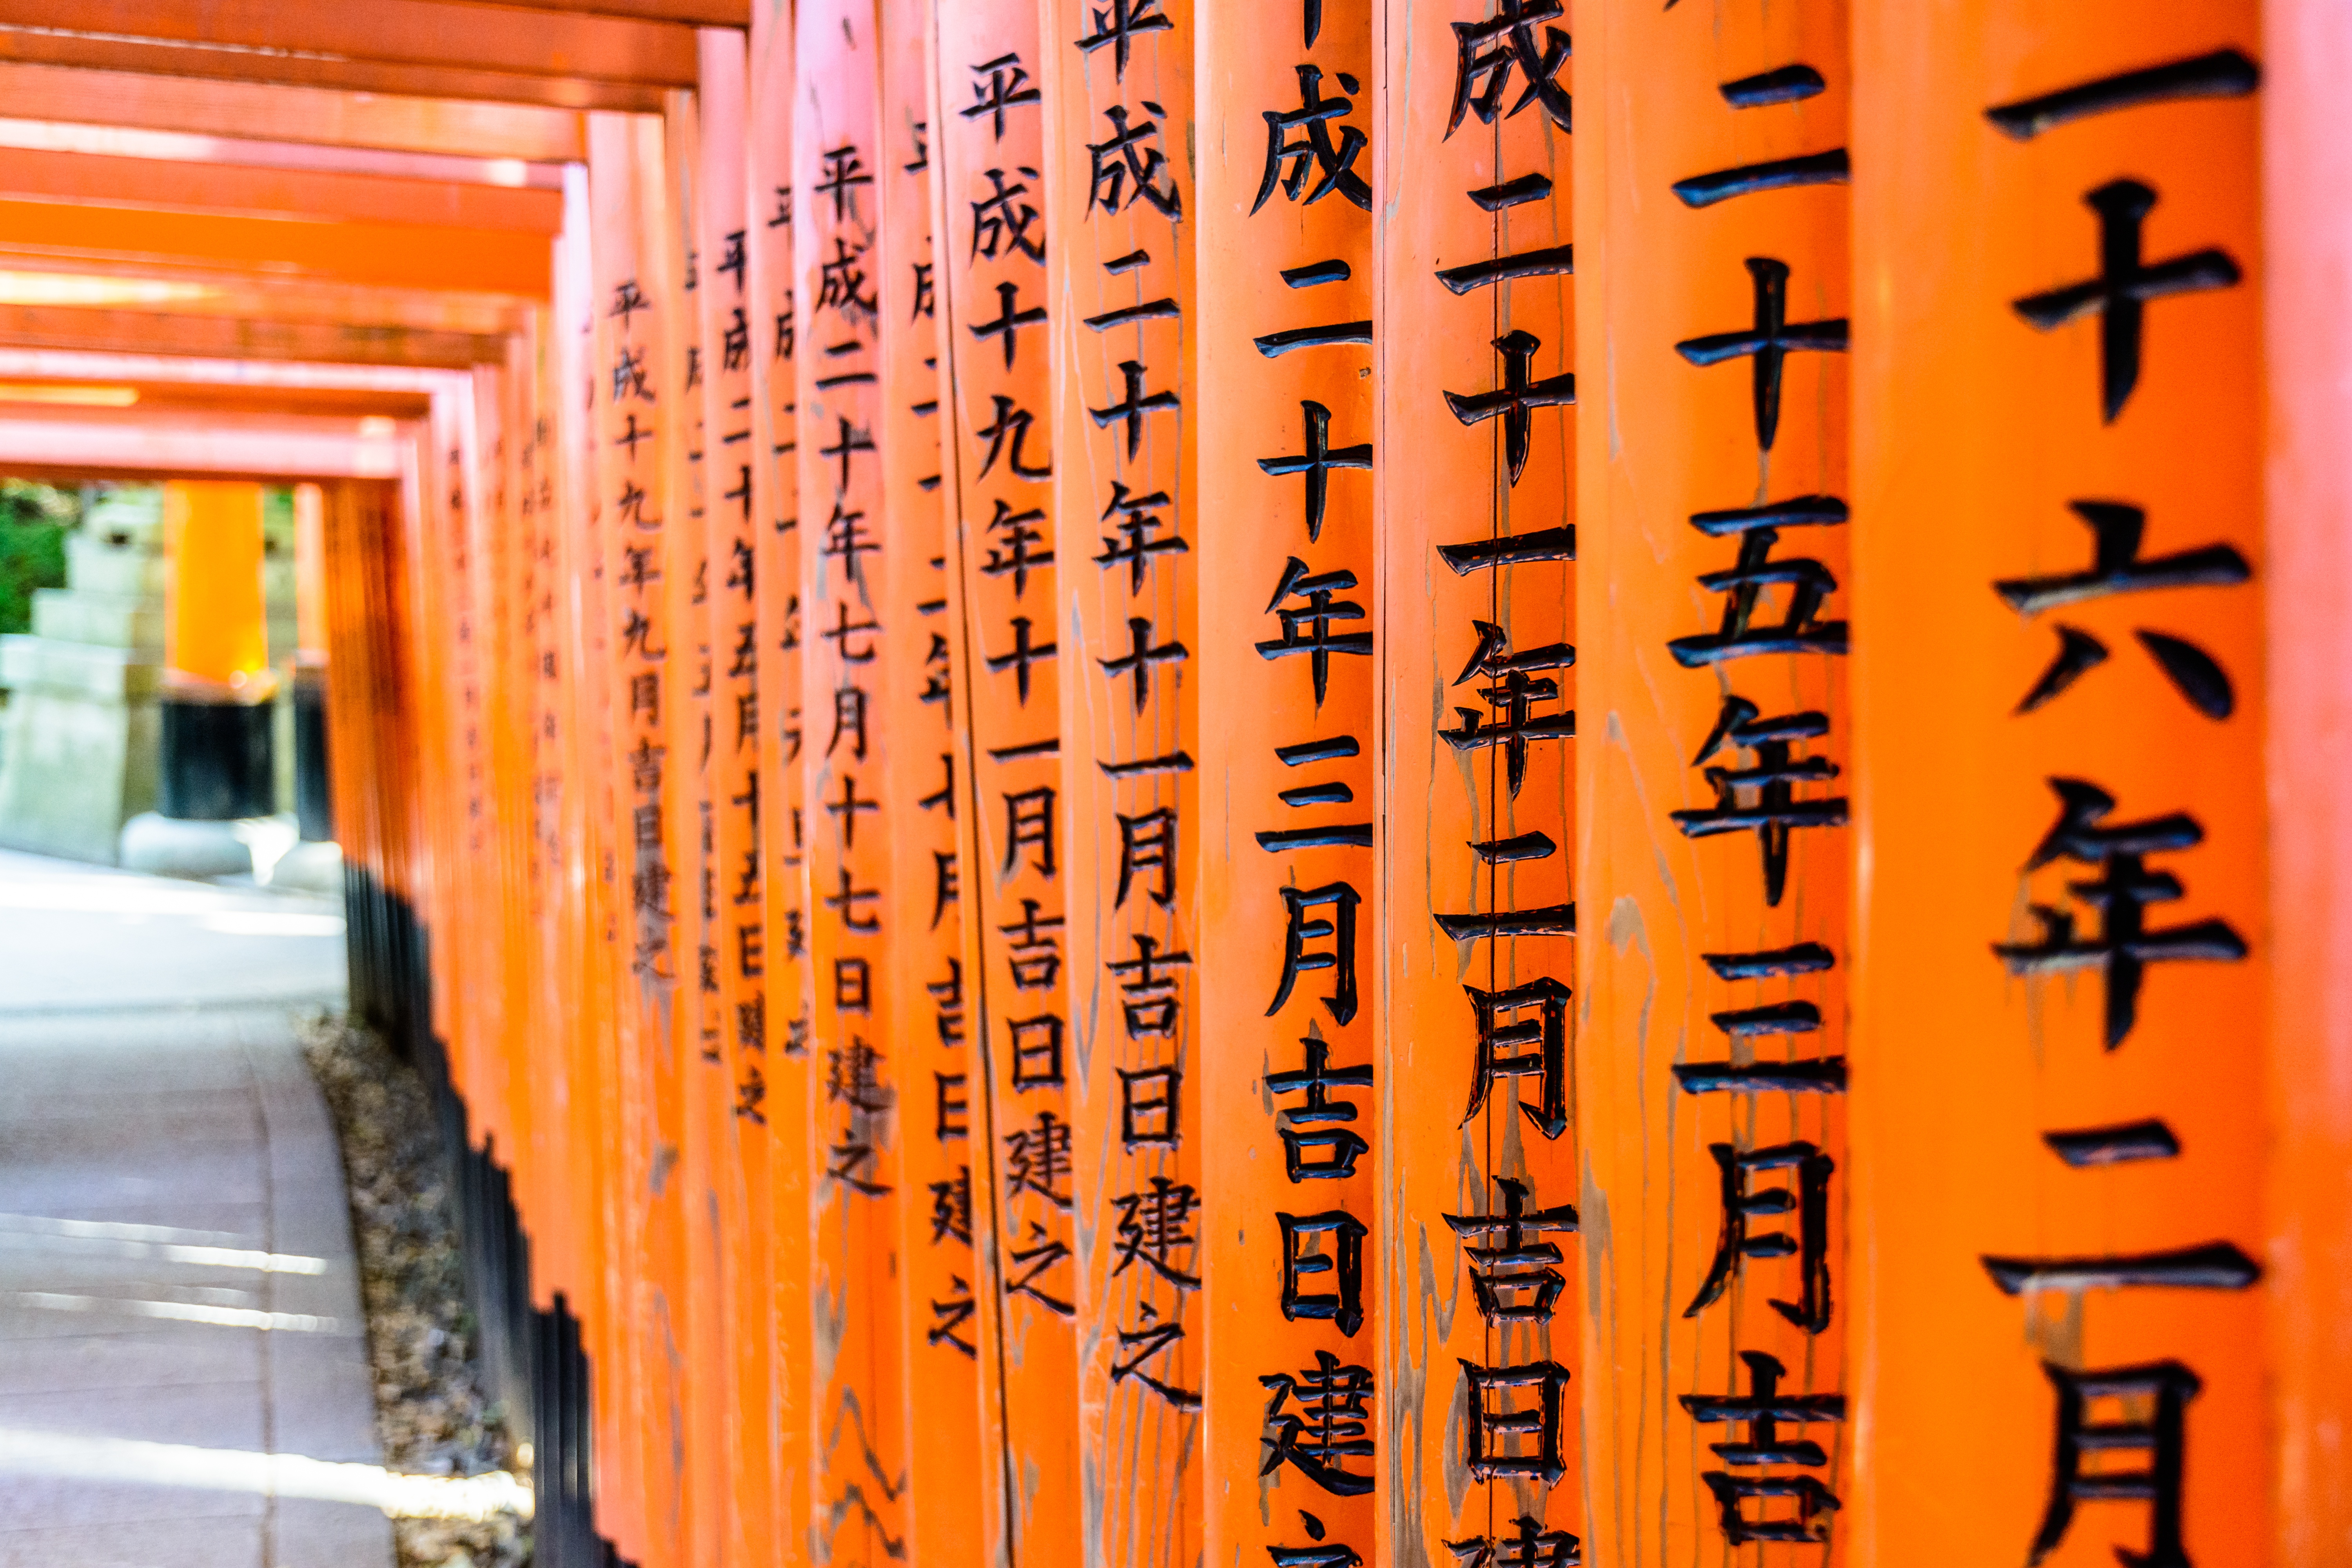 988973 descargar imagen religioso, fushimi inari taisha, japón, kioto, templo, torii: fondos de pantalla y protectores de pantalla gratis